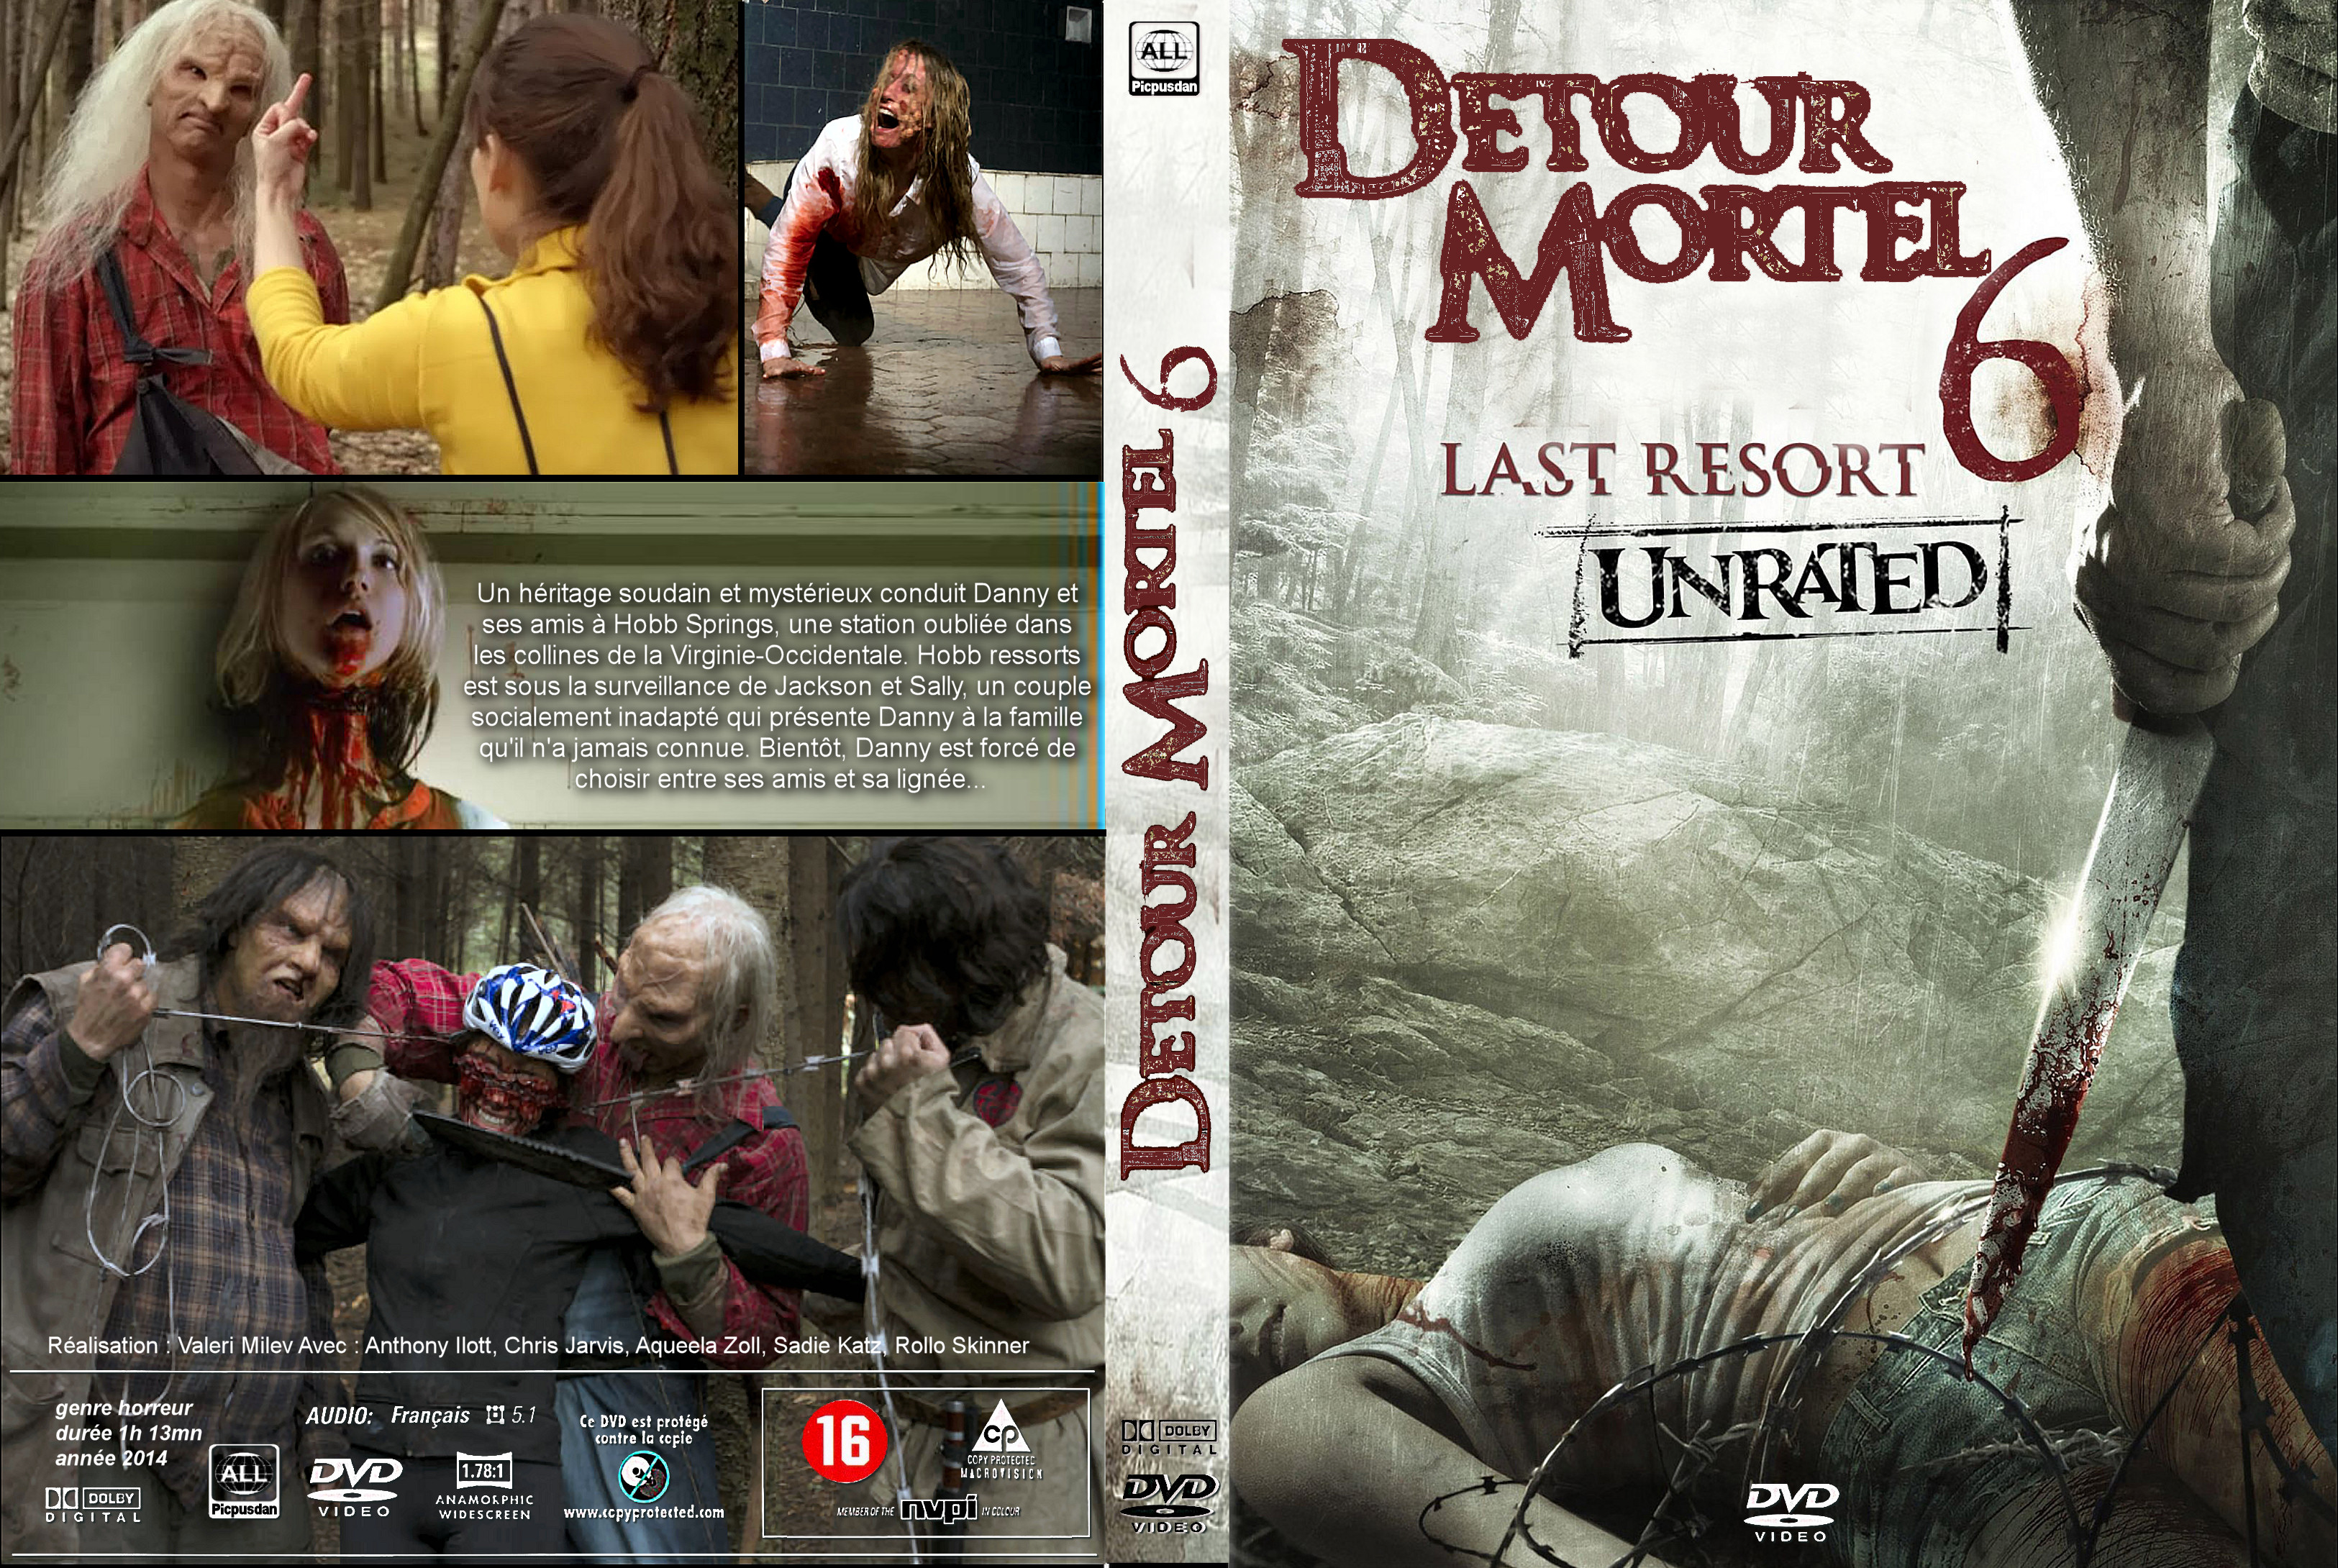 Jaquette DVD Dtour mortel 6 custom